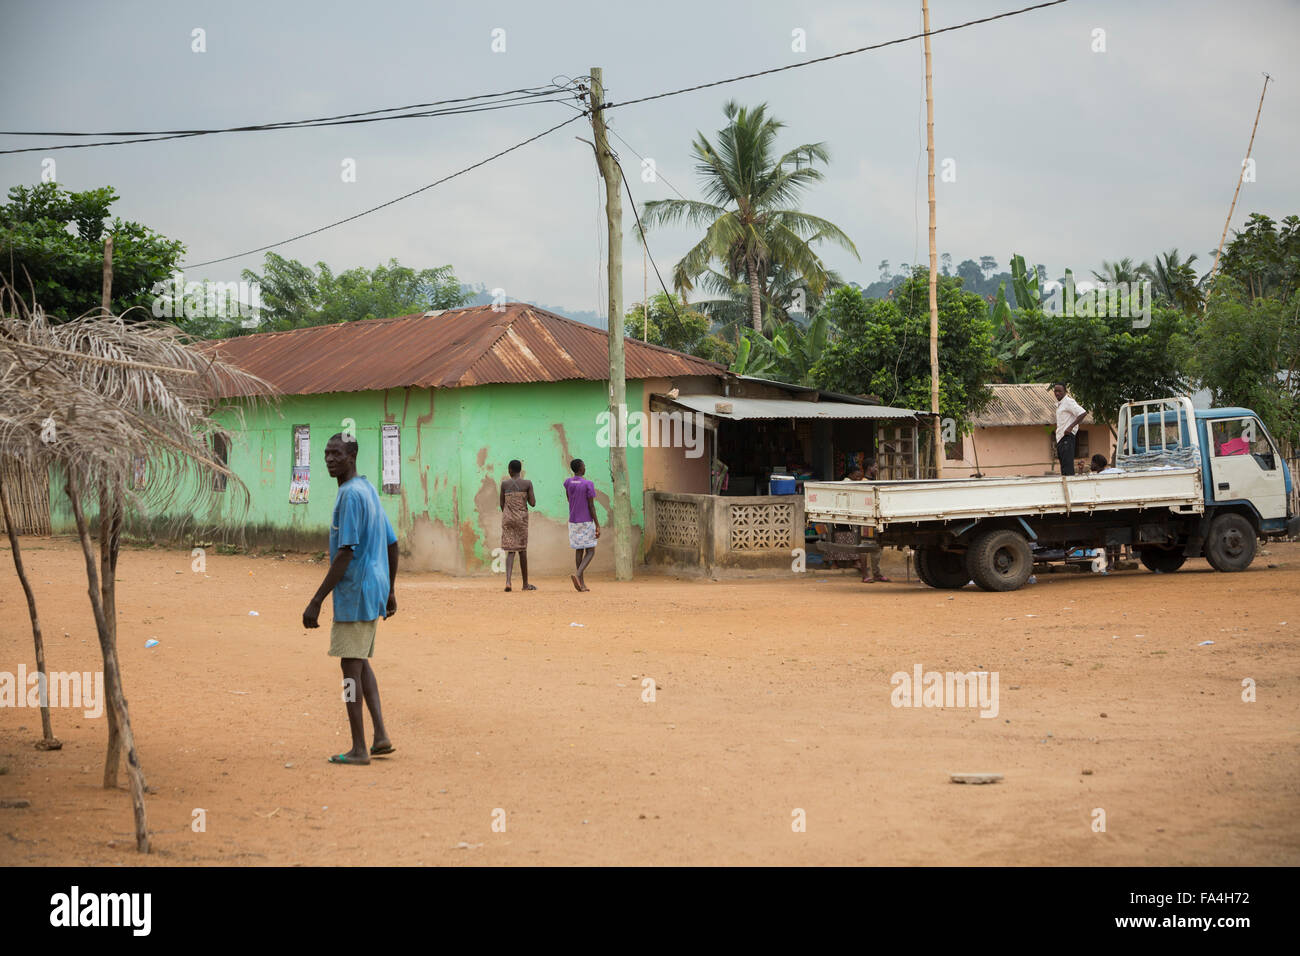 Nachbarschaft-Szene - Fotobi Dorf, südöstlichen Ghana. Stockfoto